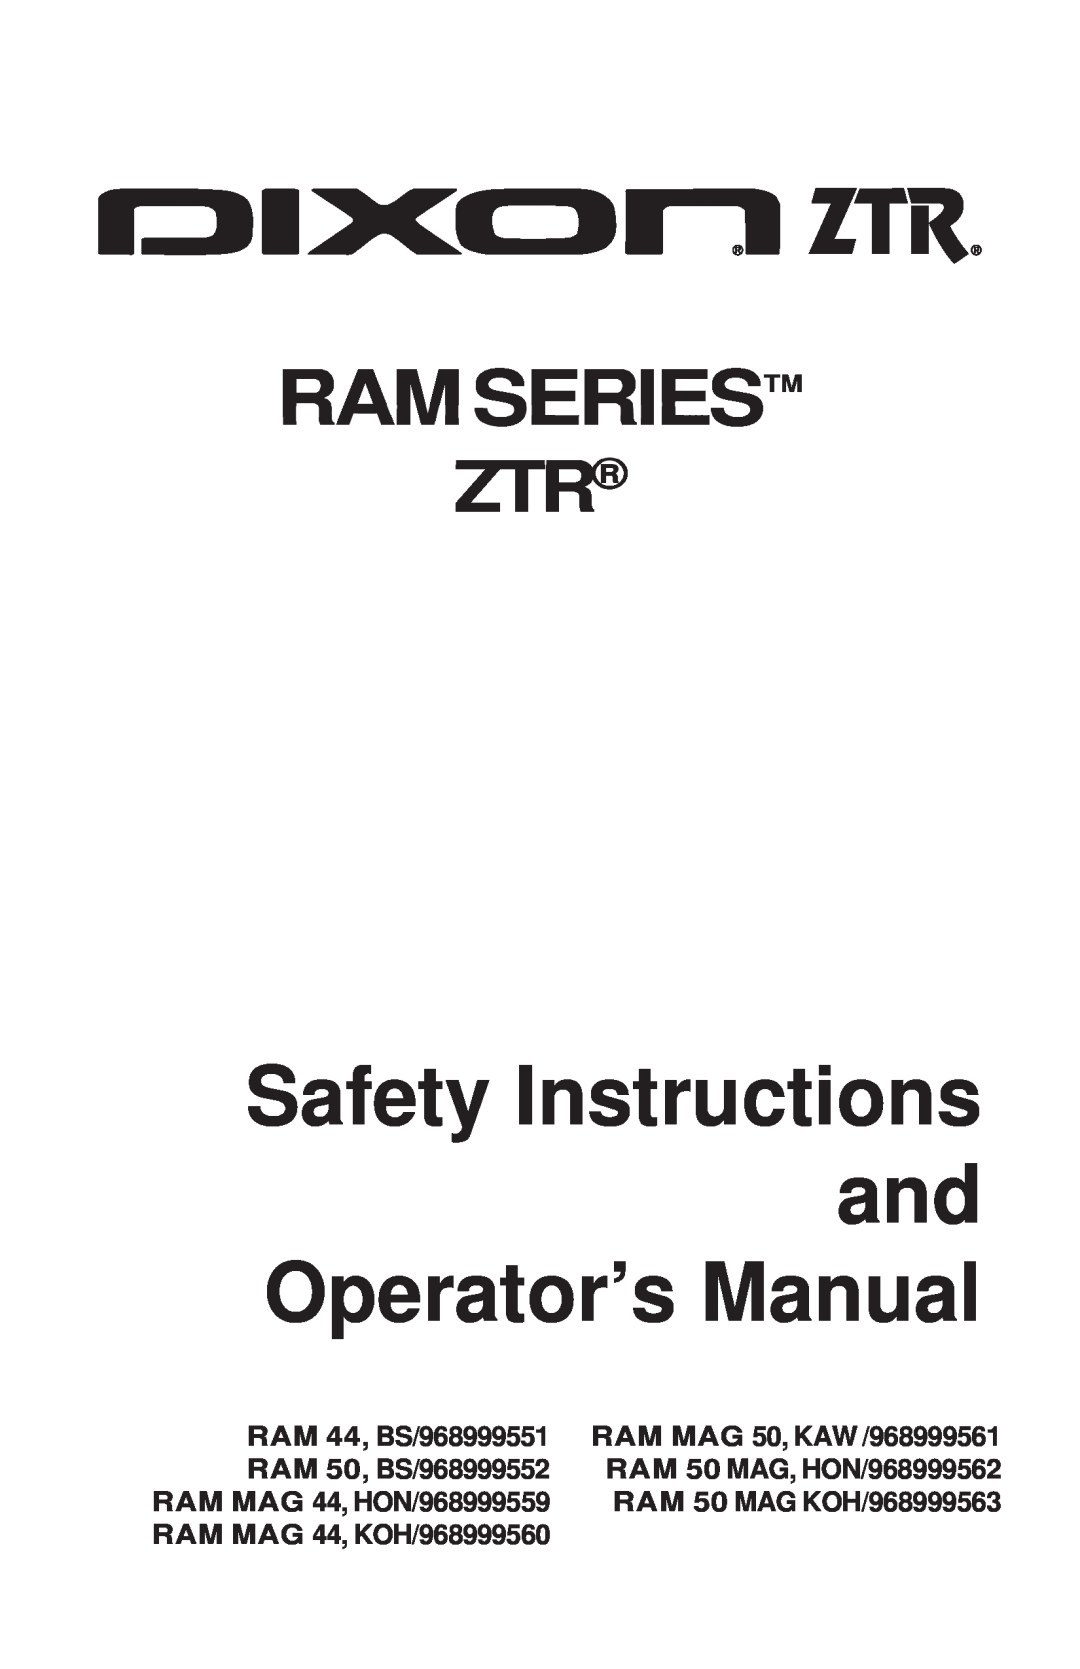 Dixon RAM 42, RAM 44, RAM 50, RAM 44 MAG, RAM 50 MAG manual Safety Instructions and Operator’s Manual, Ram Series 